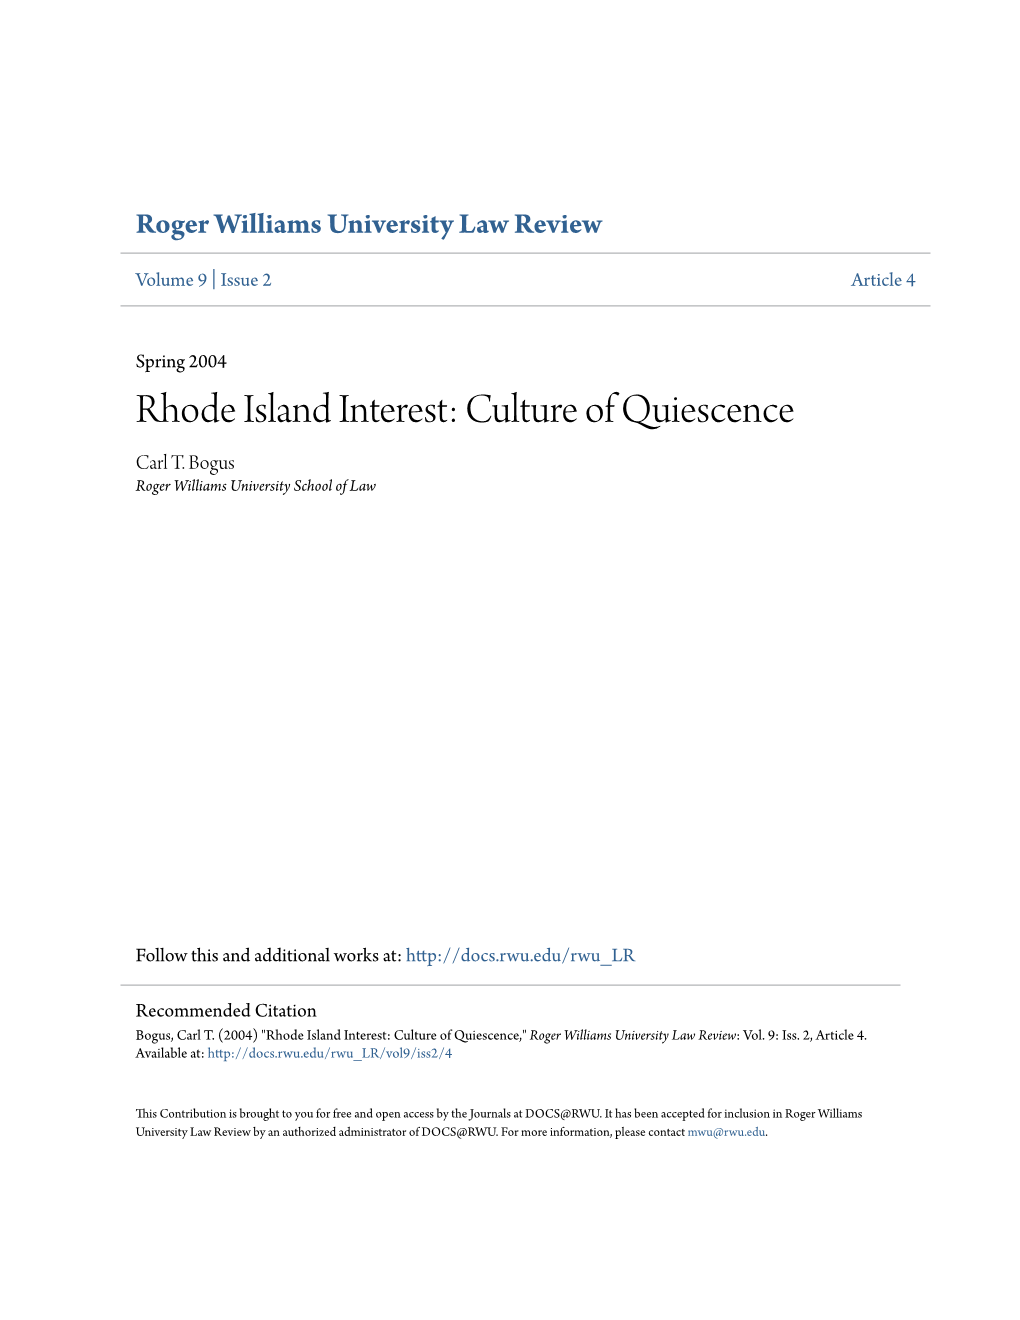 Rhode Island Interest: Culture of Quiescence Carl T